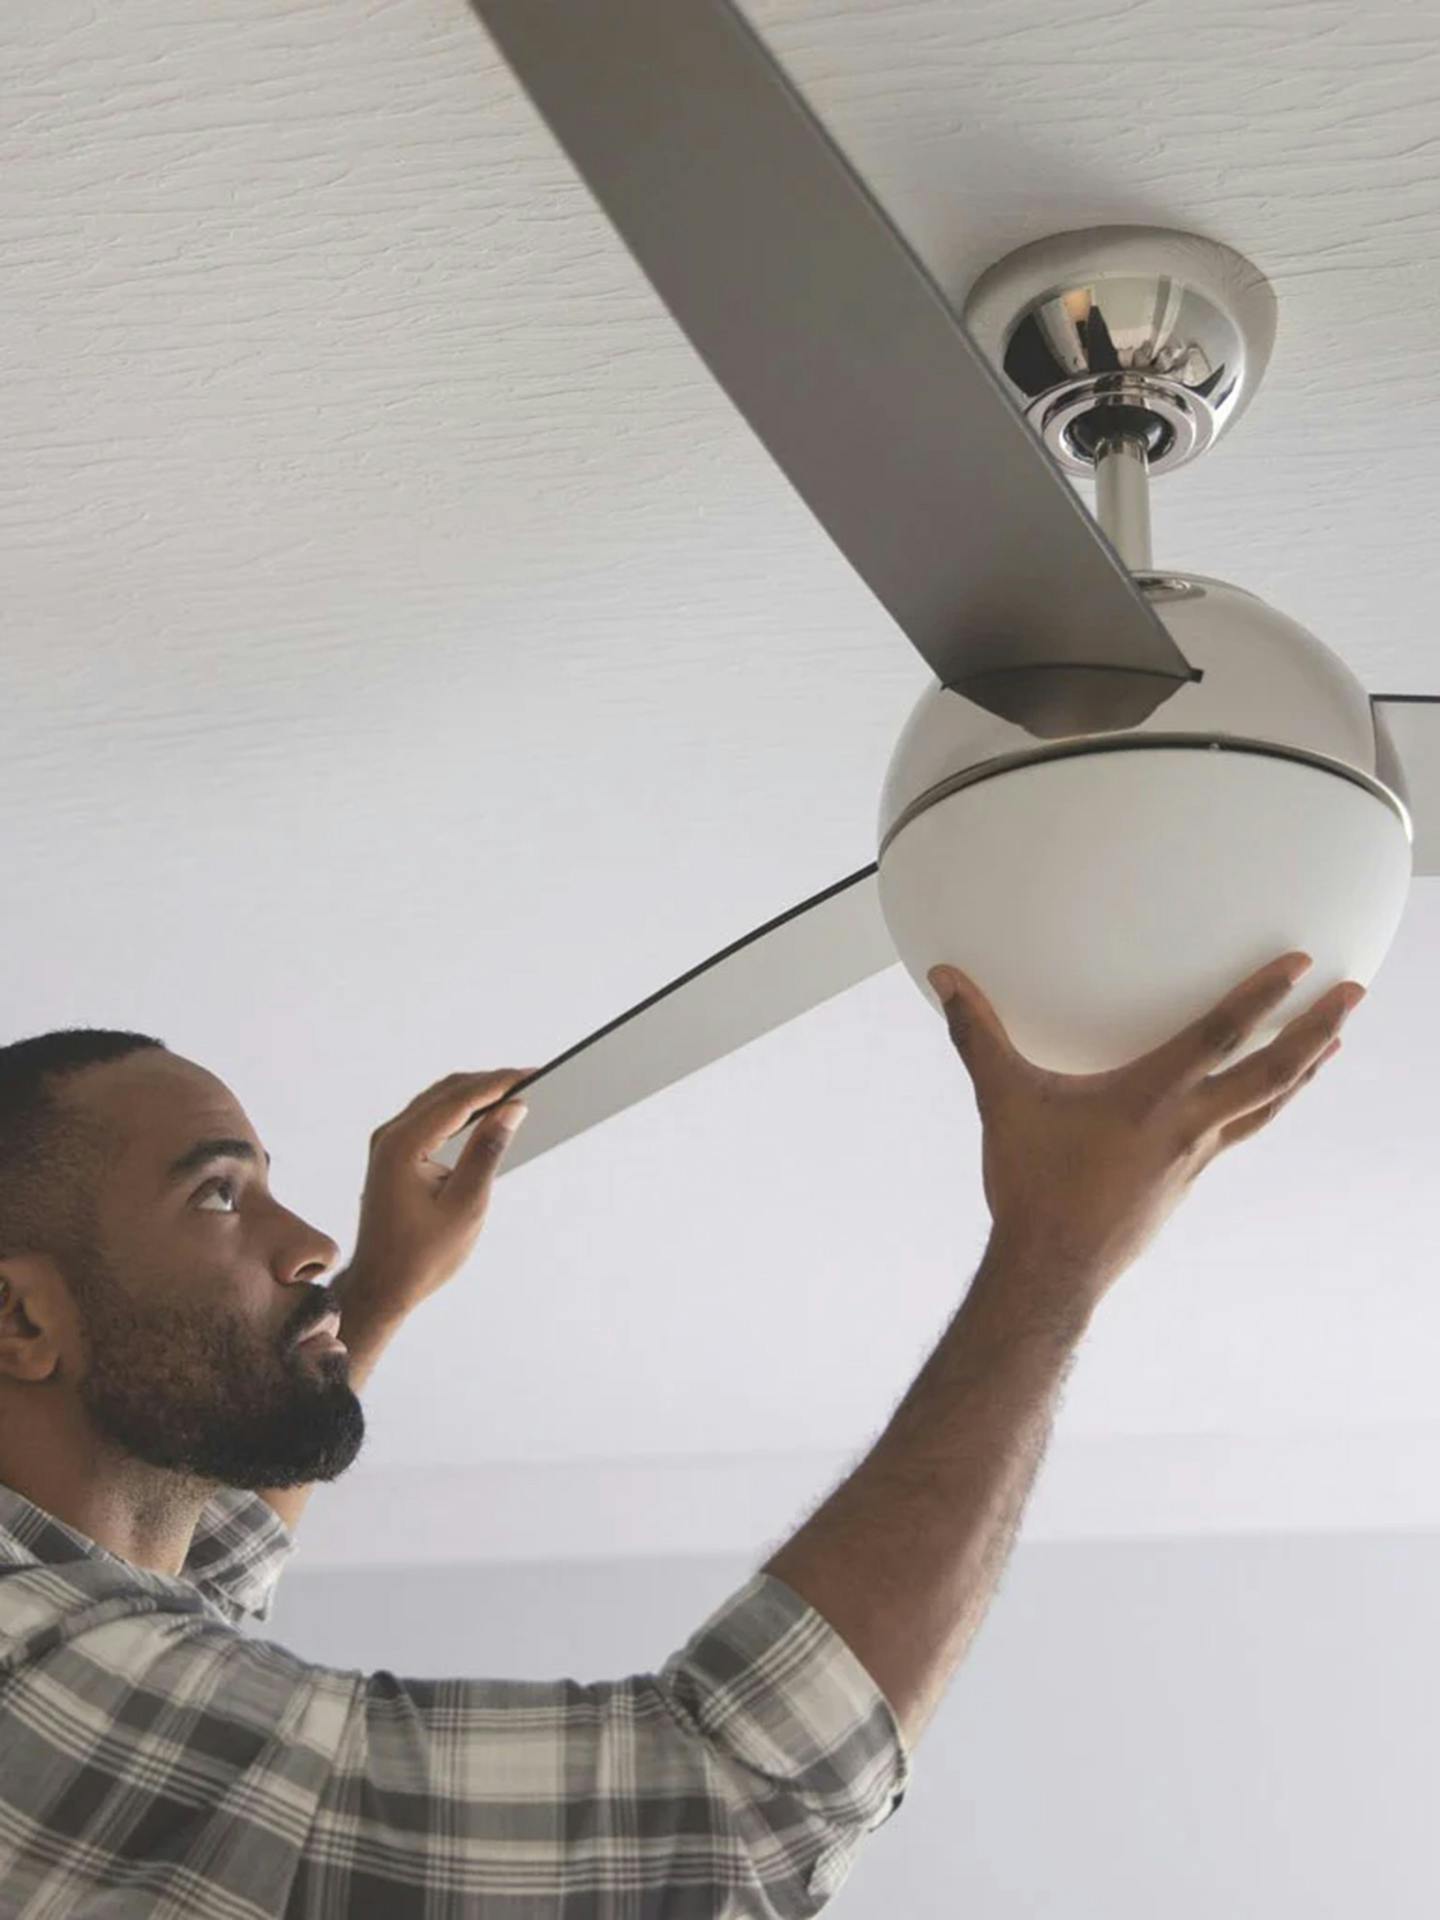 Contractor installing ceiling fan.